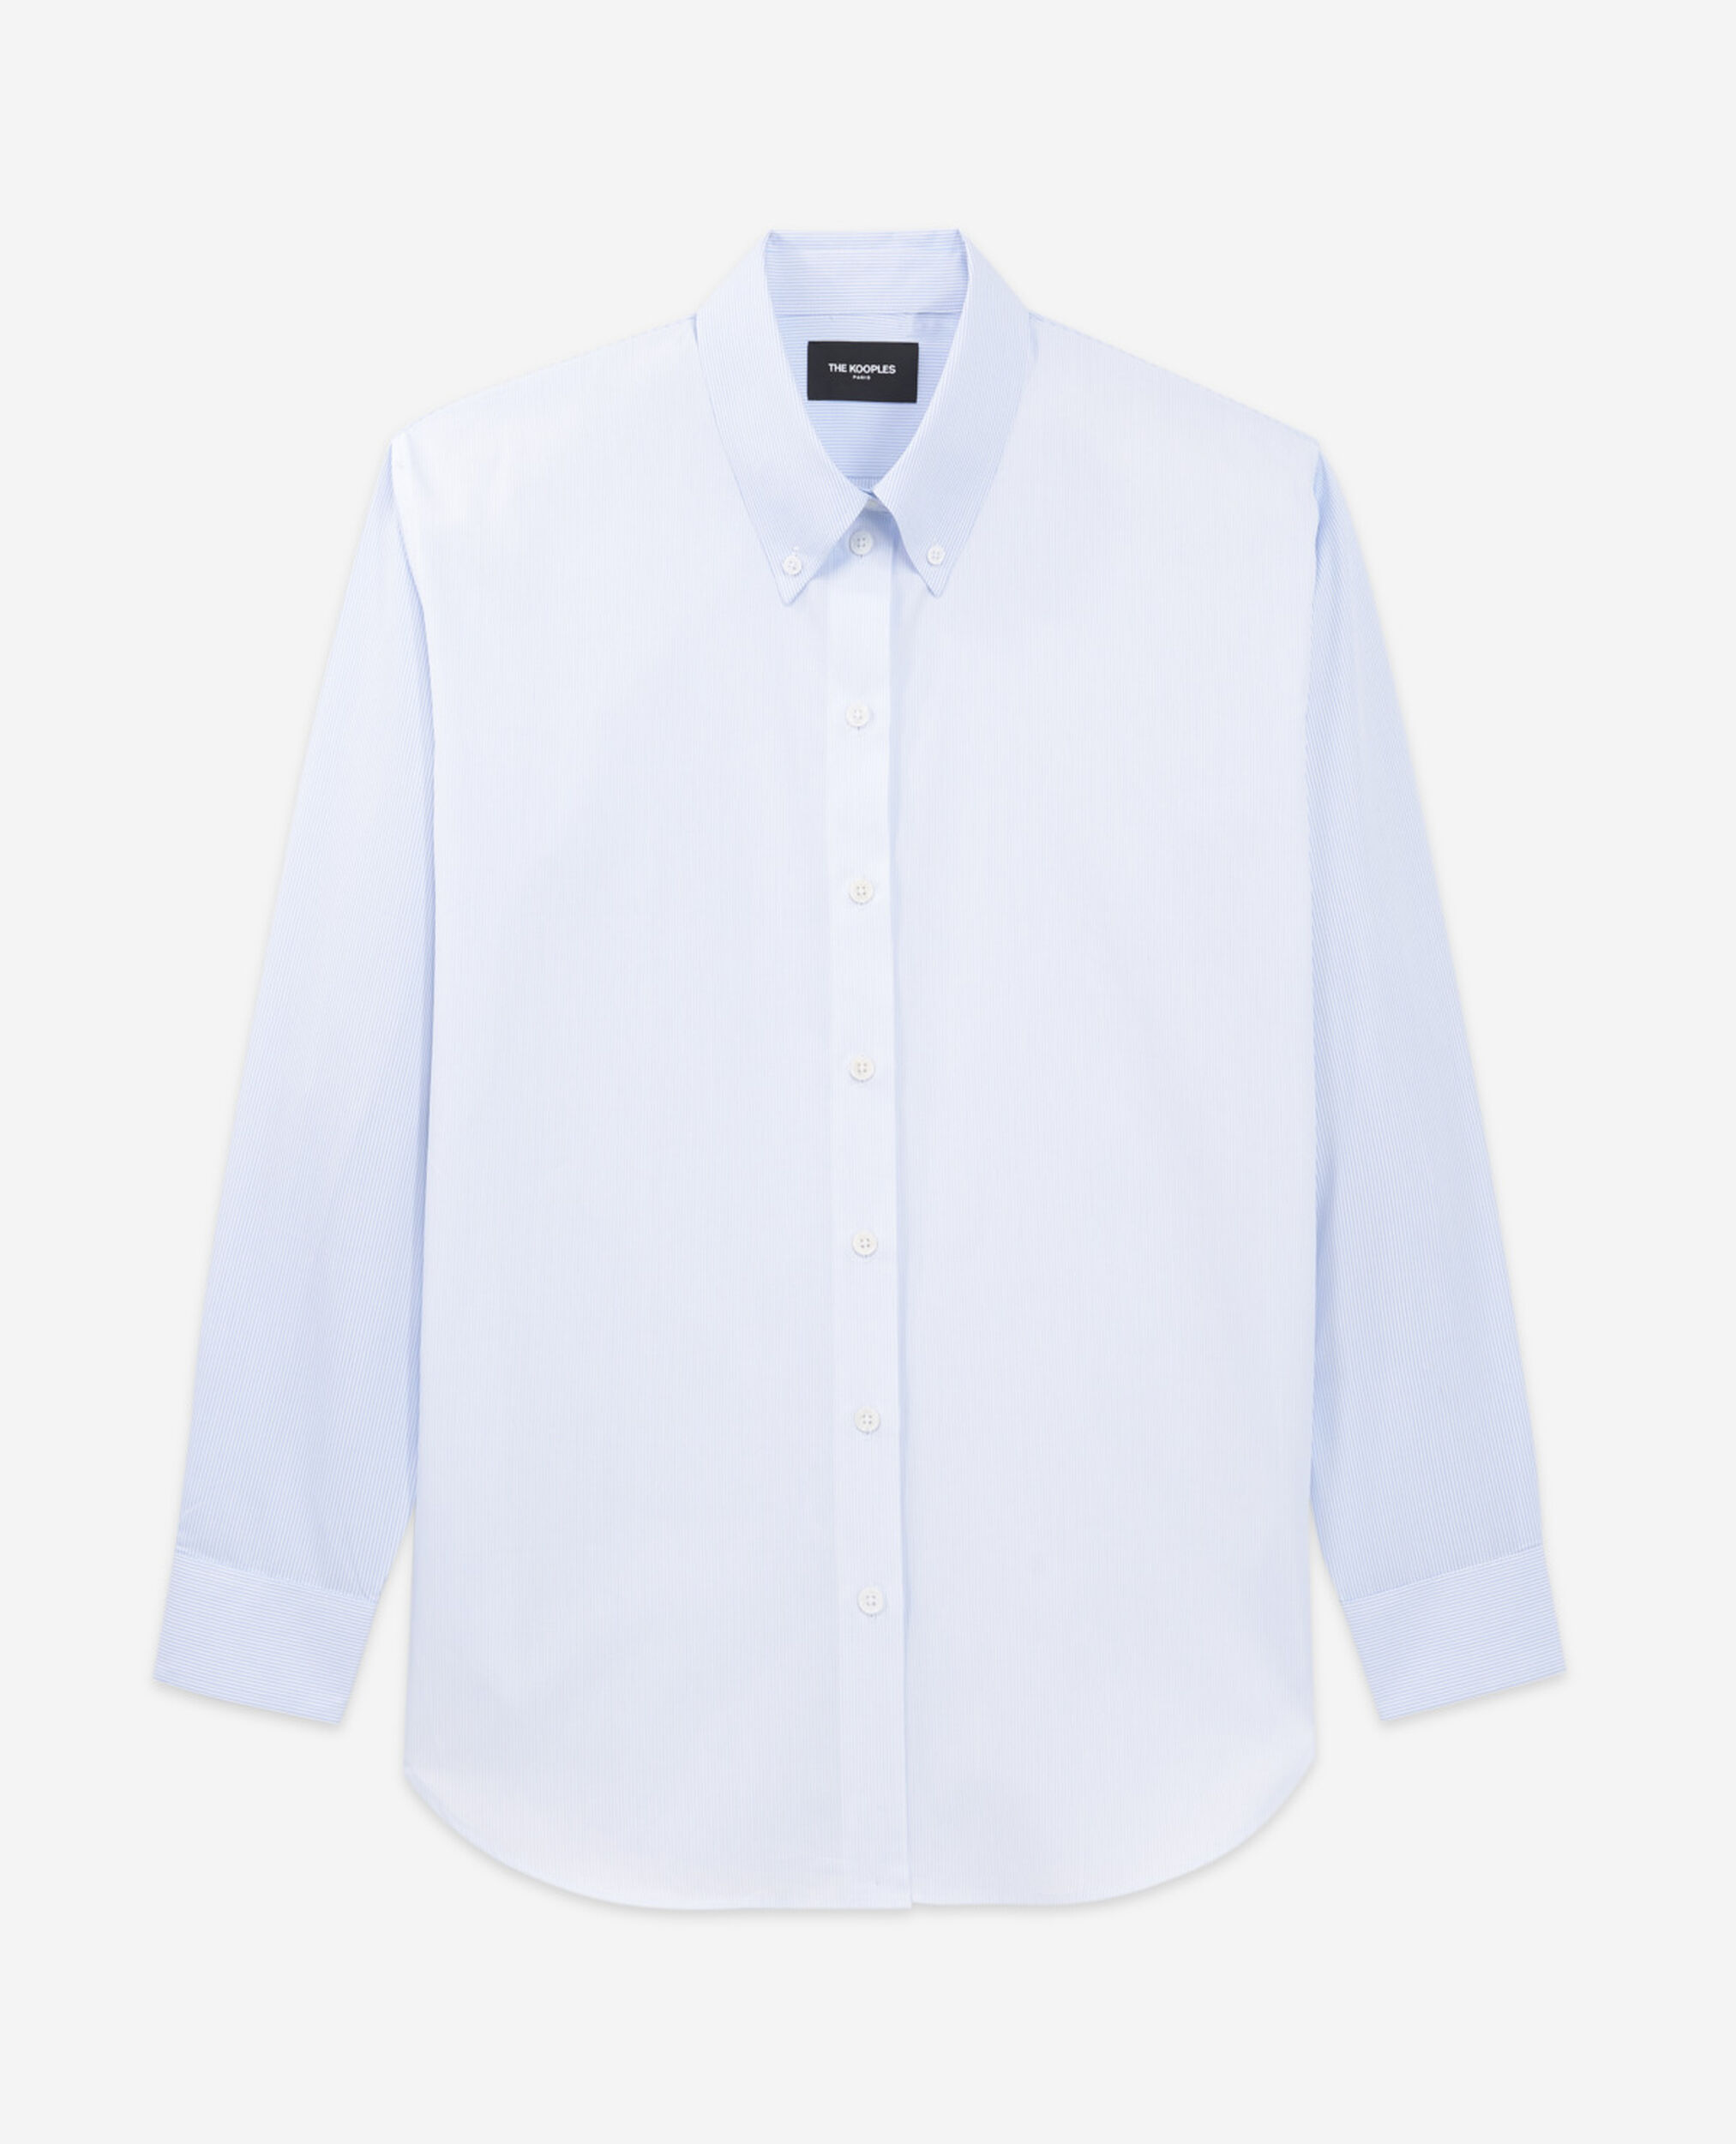 Chemise coton rayée blanc et bleu, WHITE / SKY BLUE, hi-res image number null